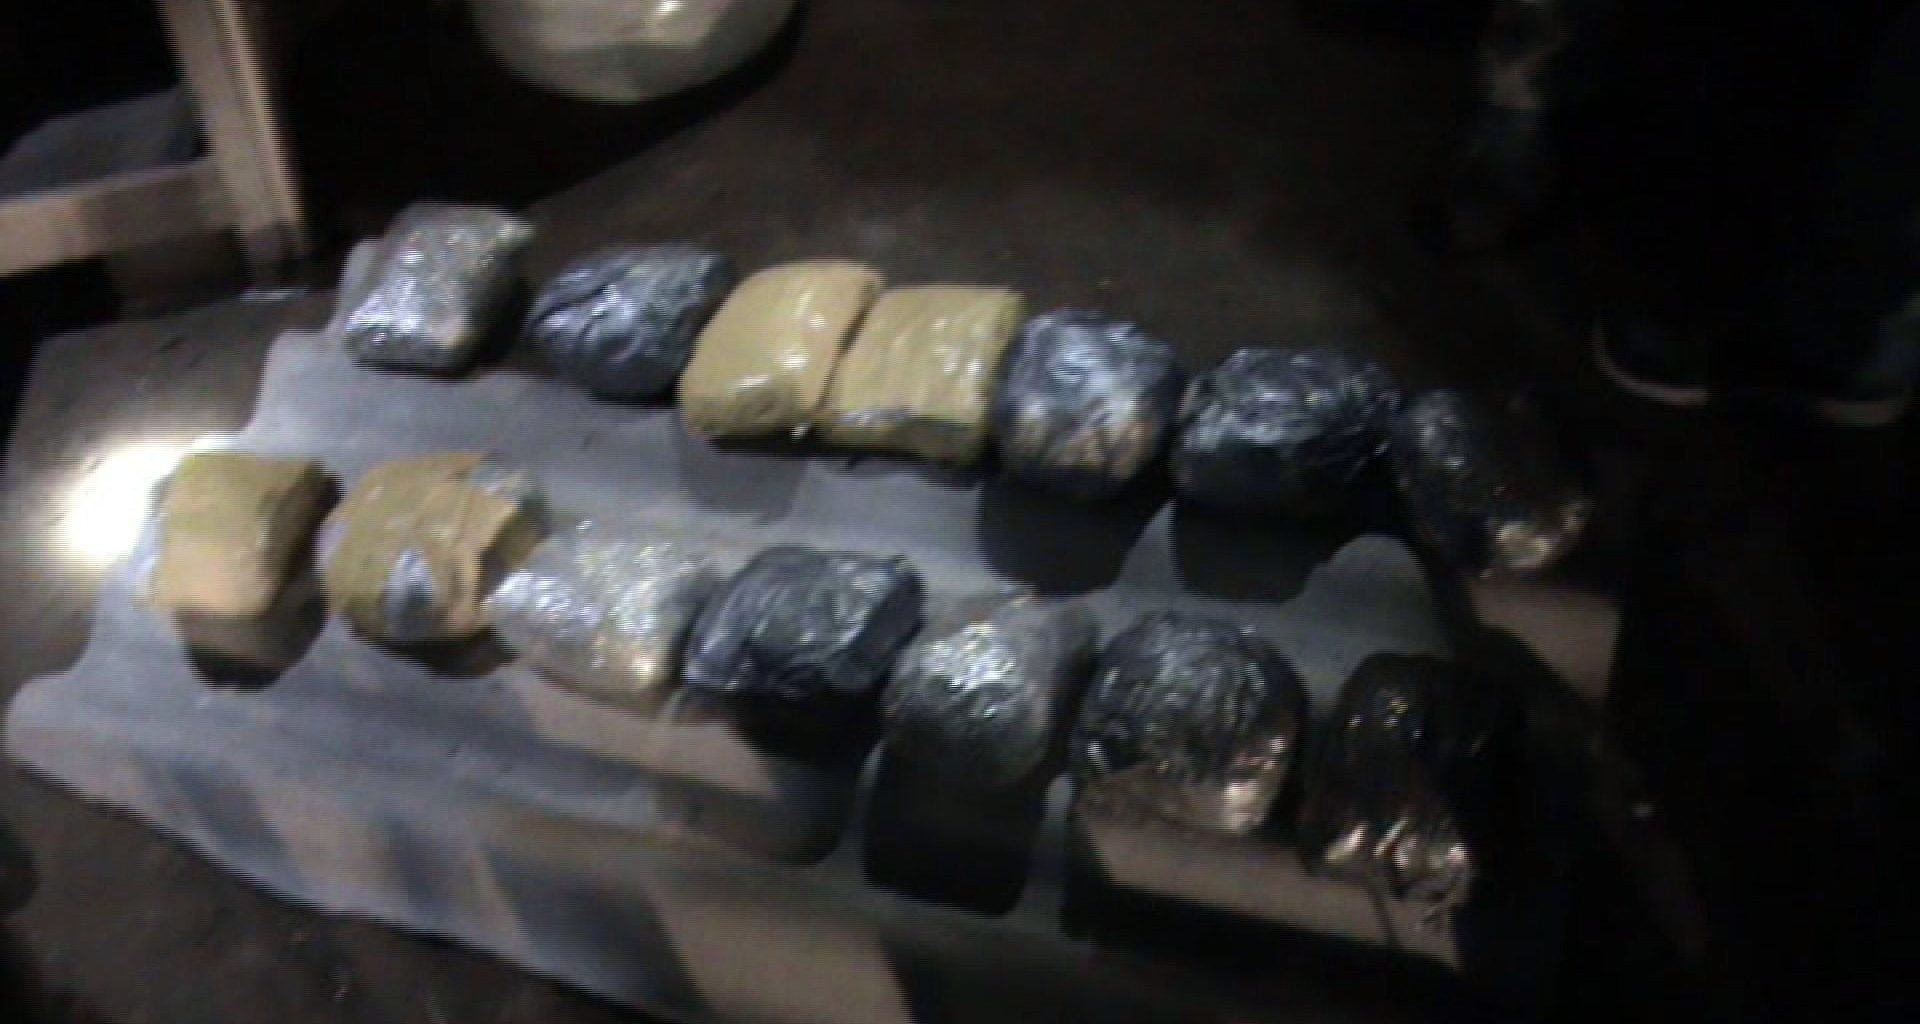 Zaplena oko 5 kg narkotika, uhapšene tri osobe